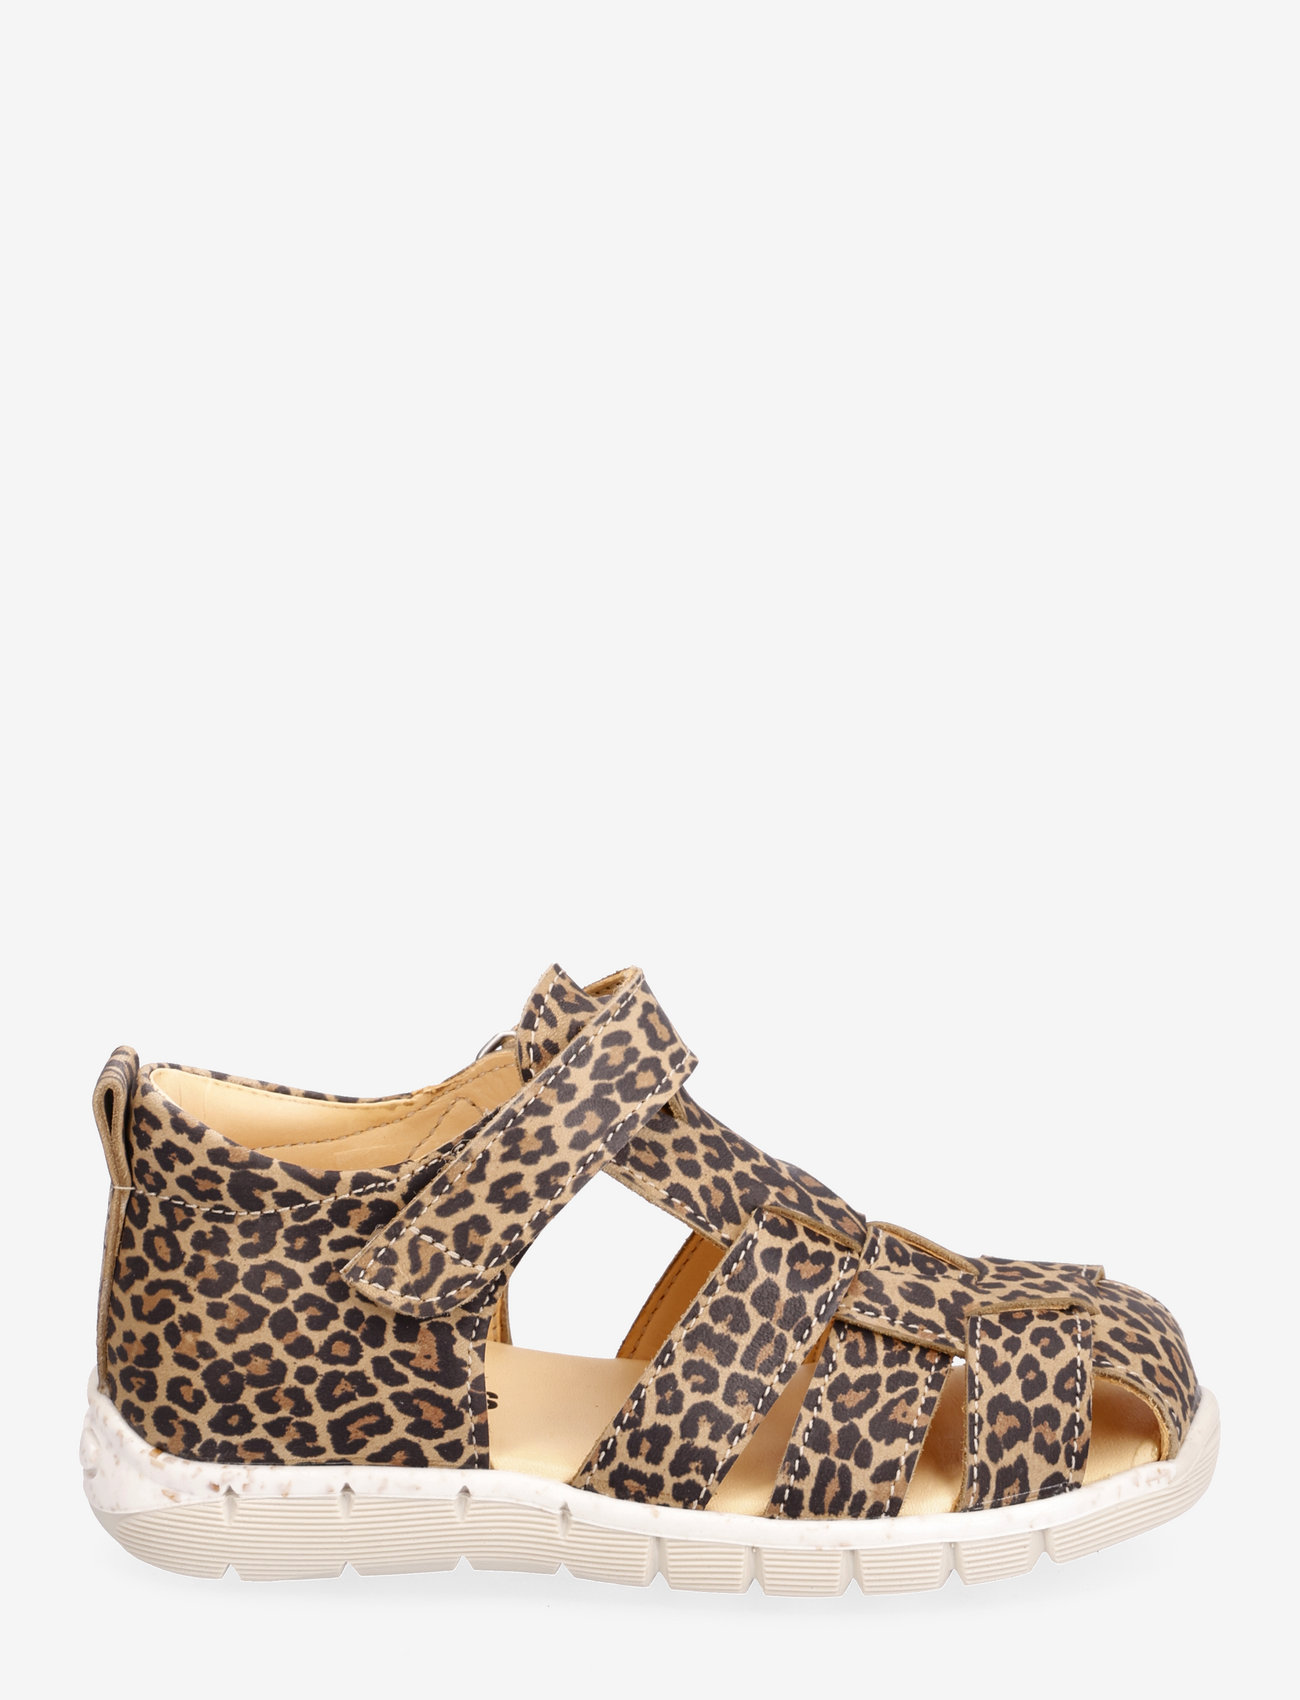 ANGULUS - Sandals - flat - closed toe -  - summer savings - 2185 leopard - 1